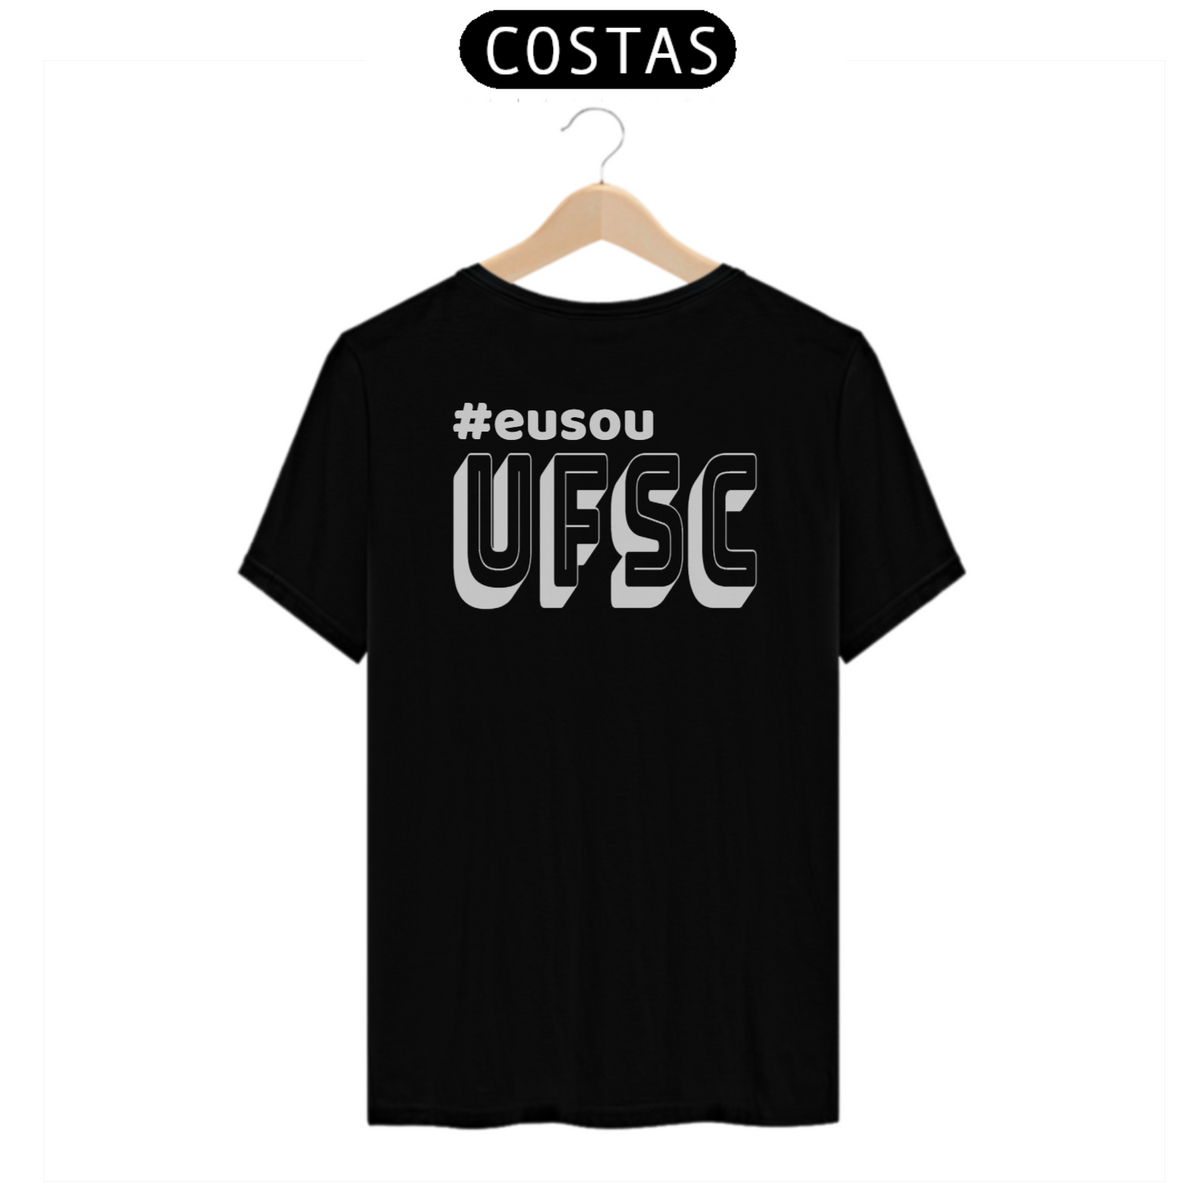 Nome do produto: Camiseta [UFSC] {cores diversas} -costas - #eusouufsc